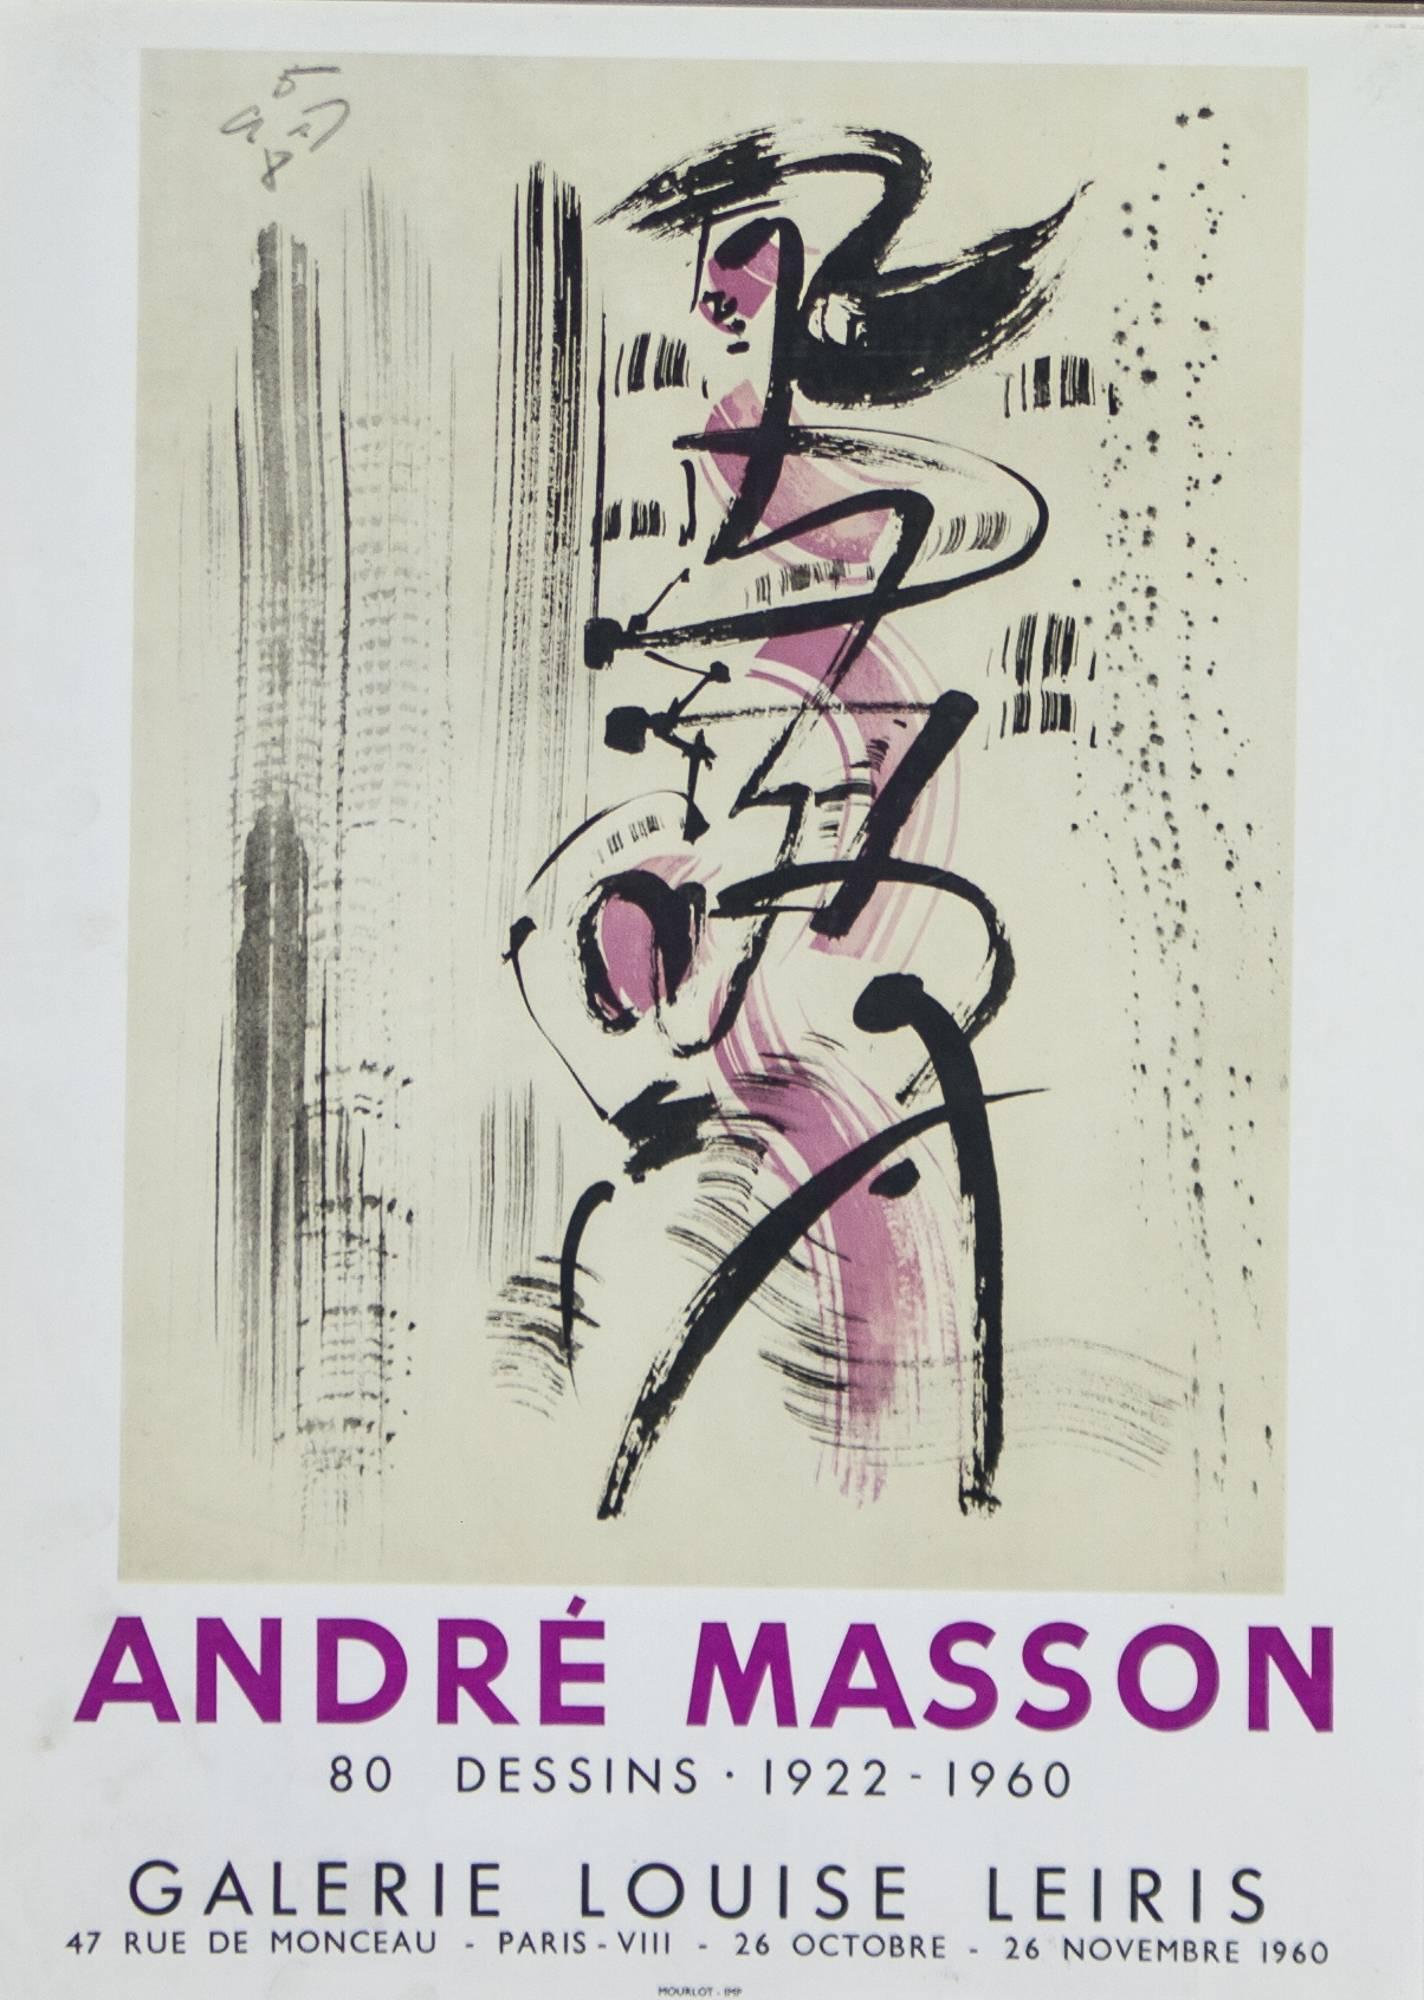 André Masson Abstract Print – Andre Masson 80 Dessins 1922-1960 Galerie Louise Leiris, Paris